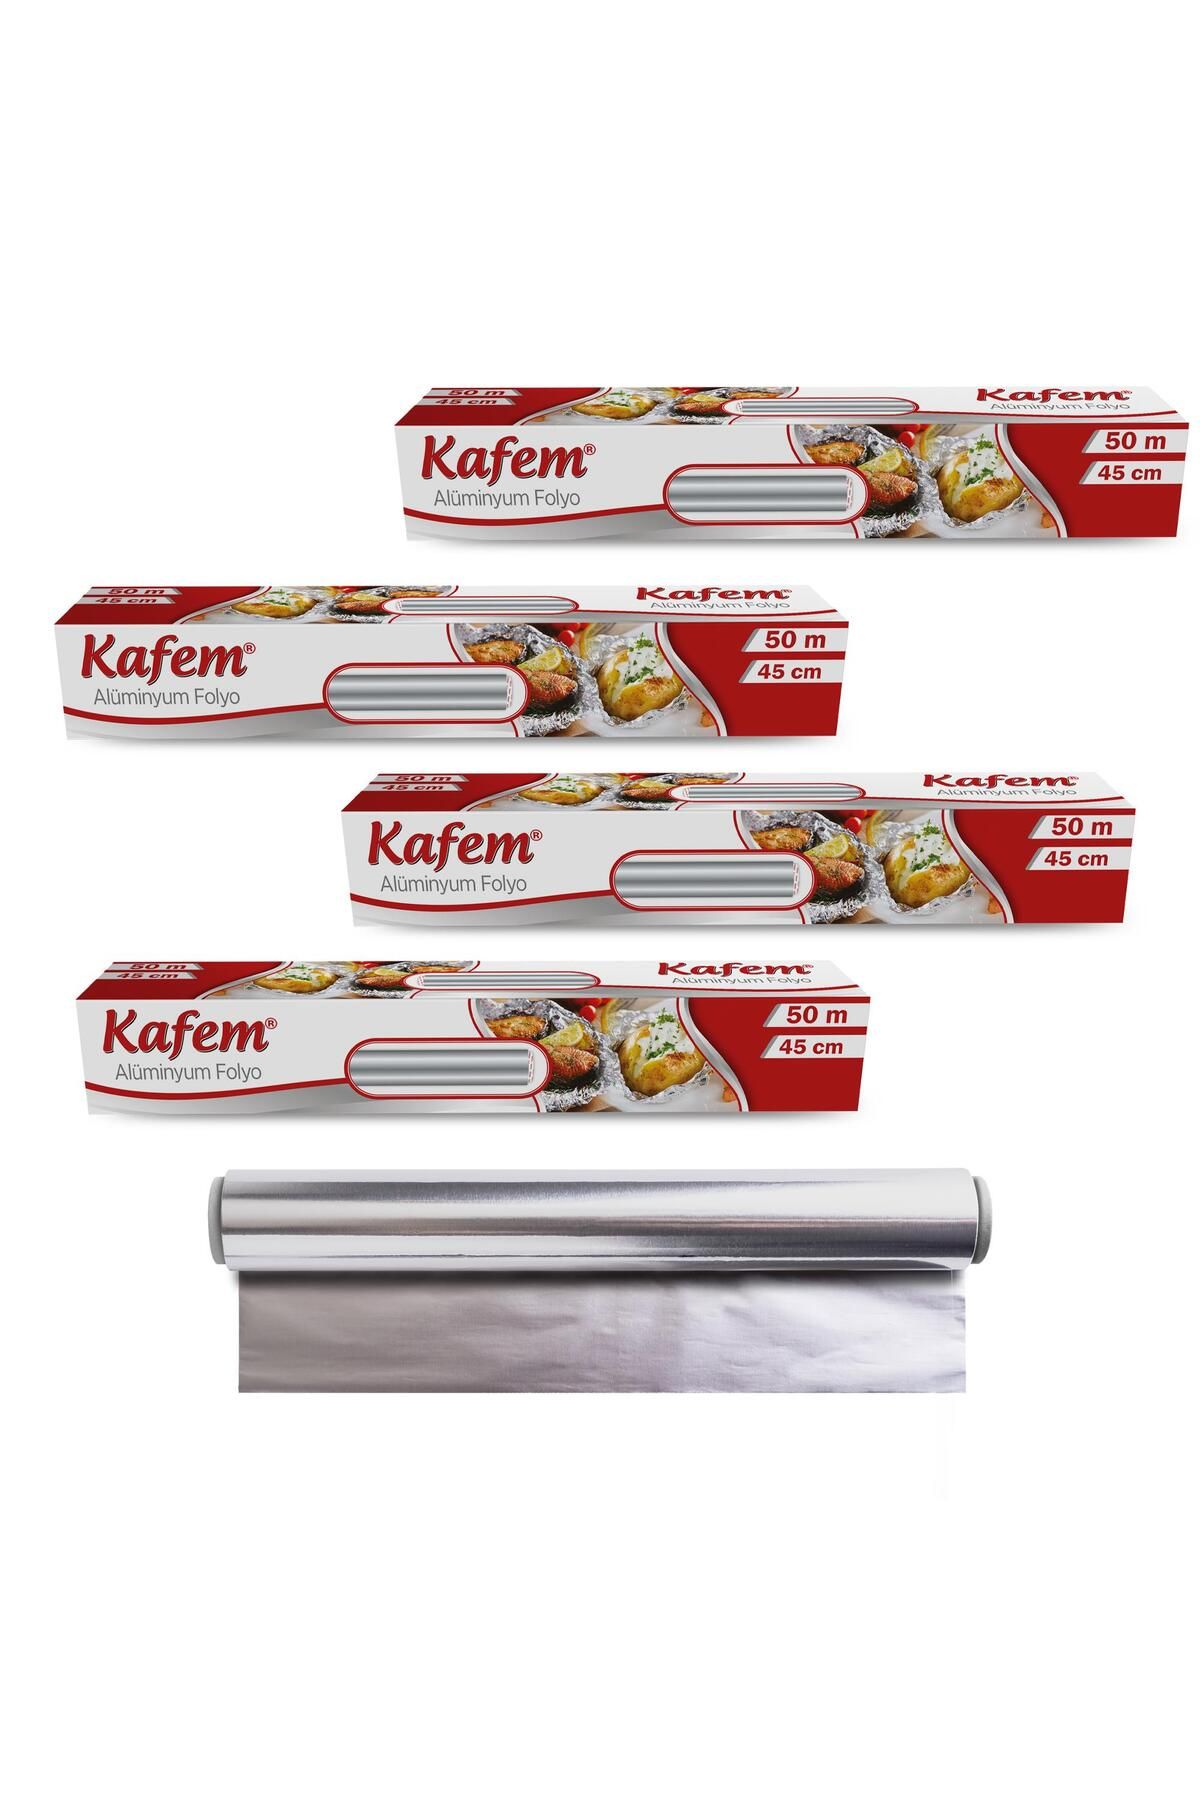 KAFEM Aluminyum Folyo 45cm x 50m 10mic x 4 Paket